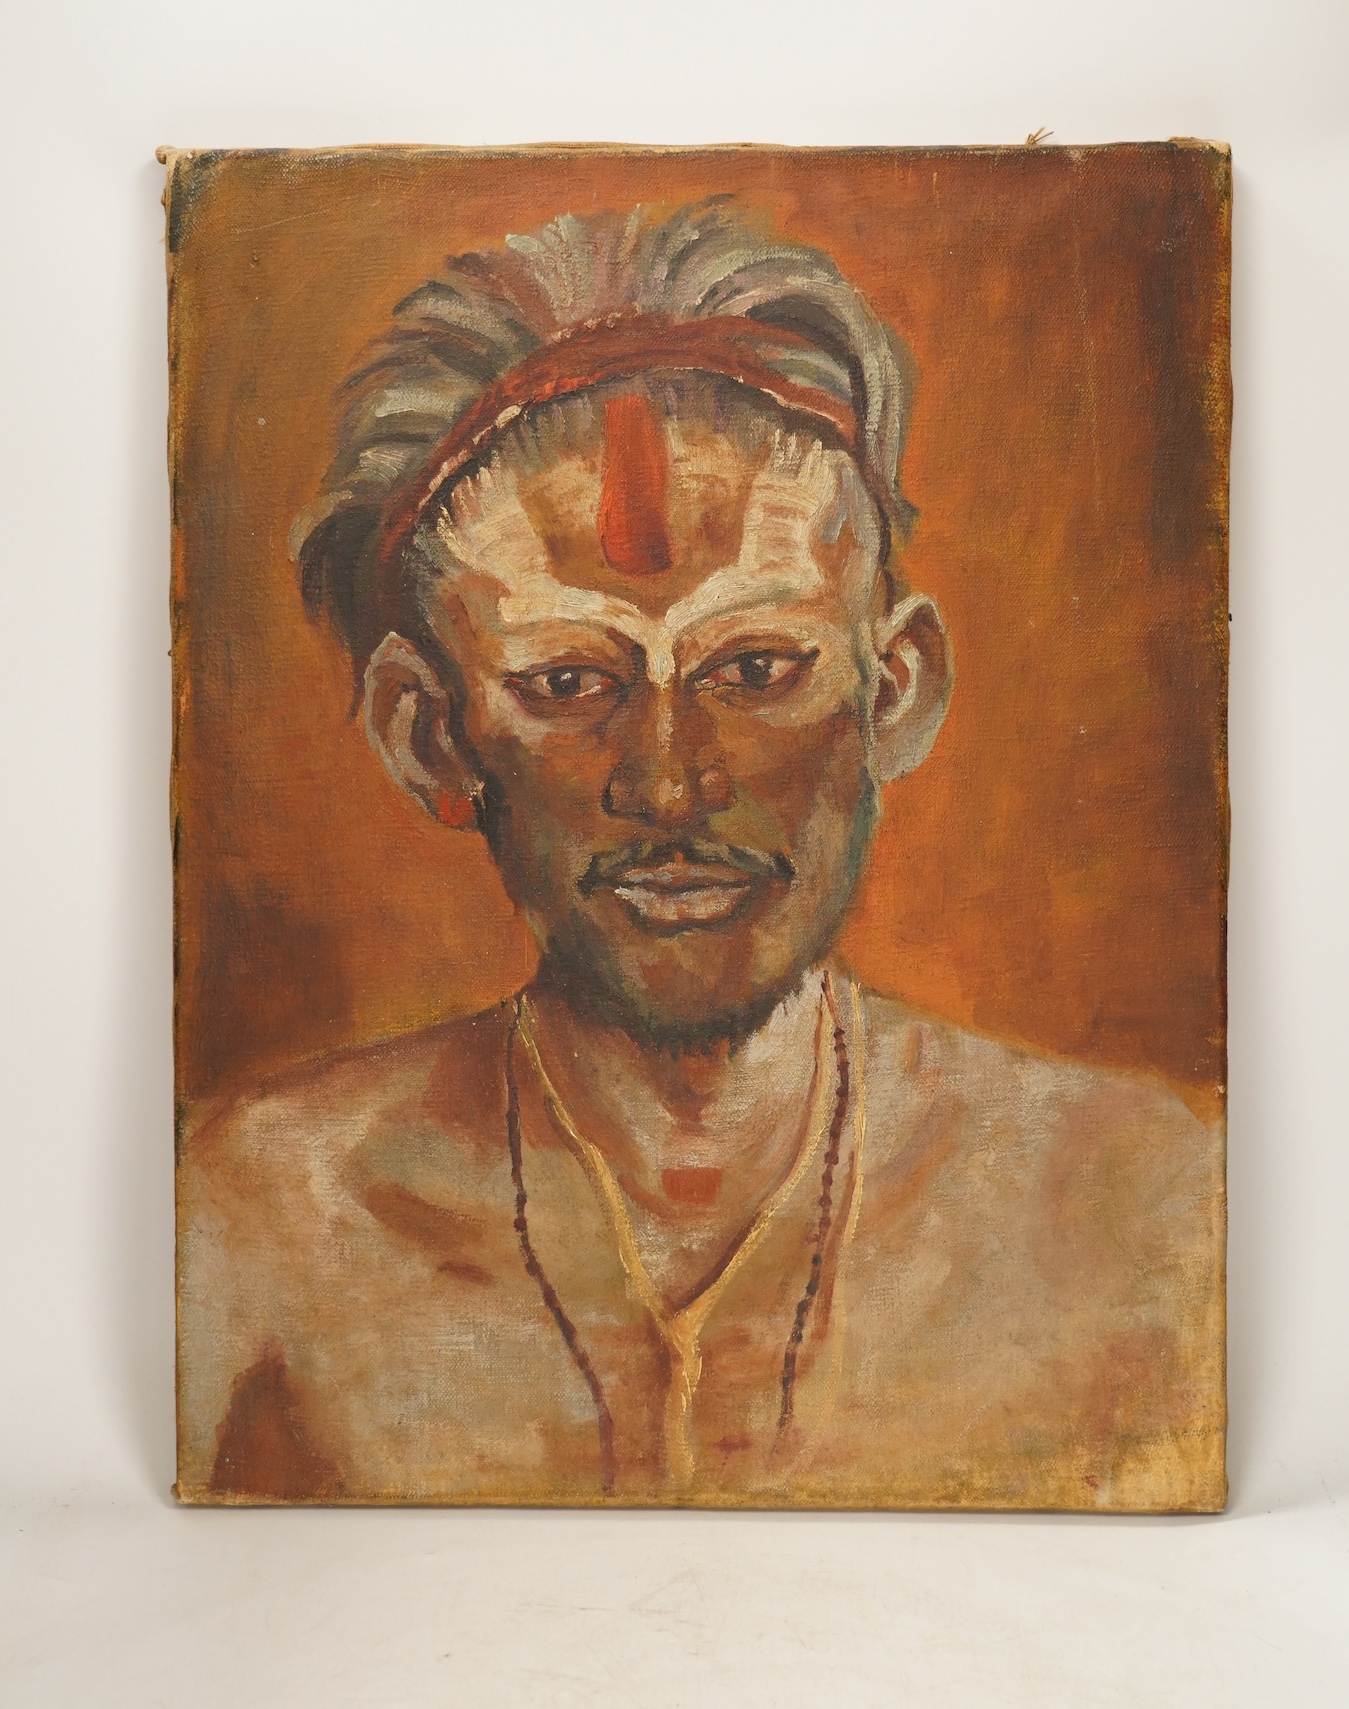 Ramen Roy (Indian), oil on canvas, Portrait of a gentleman, unsigned, details verso. Condition - fair